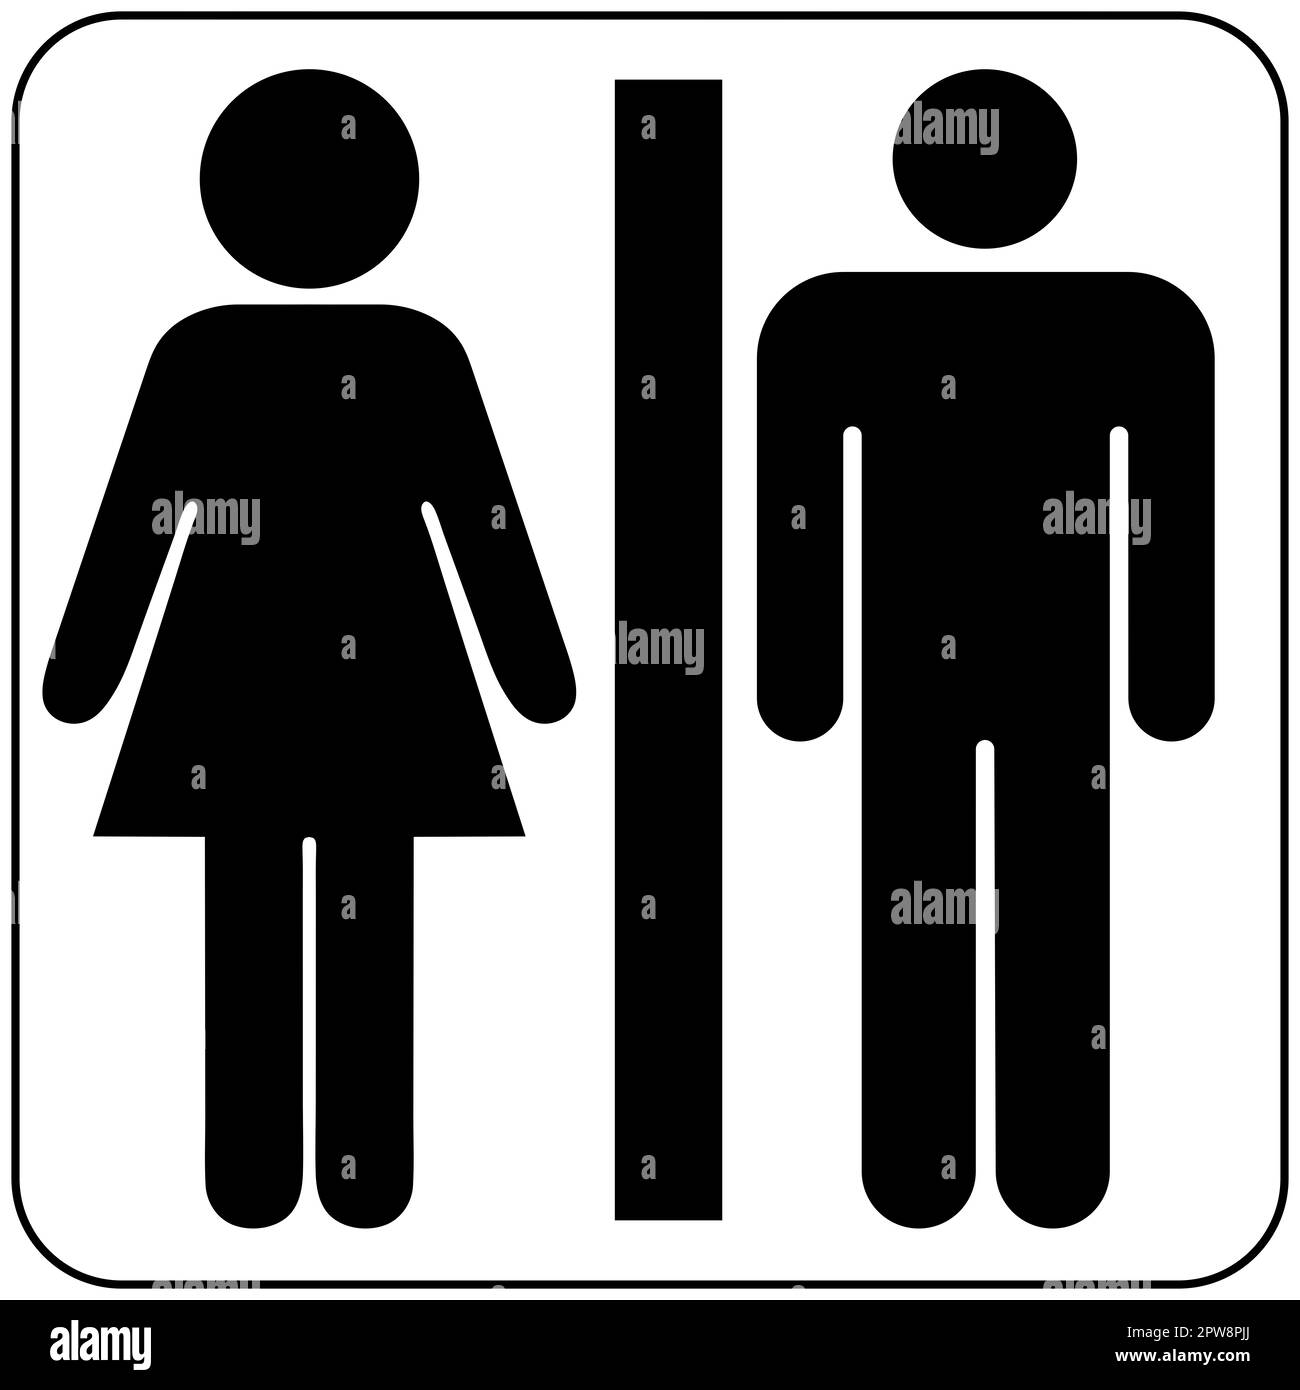 Department of Transportation toilets pictogram Stock Photo